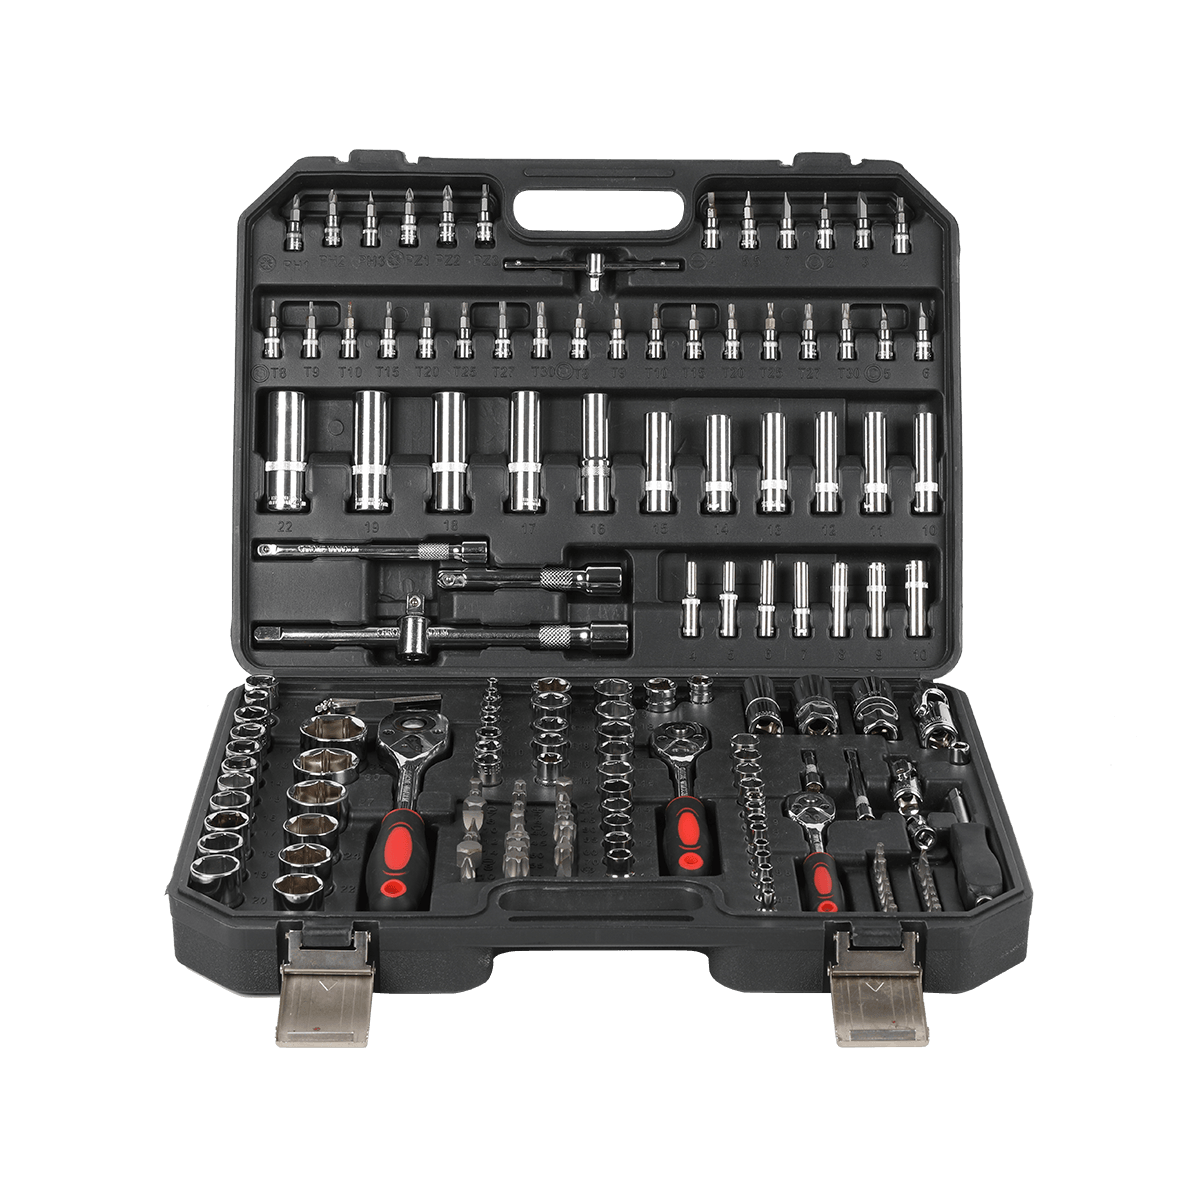 171 Pcs Professional มัลติฟังก์ชั่นประแจเครื่องมือรวม Spanner Socket Set สำหรับซ่อมรถ